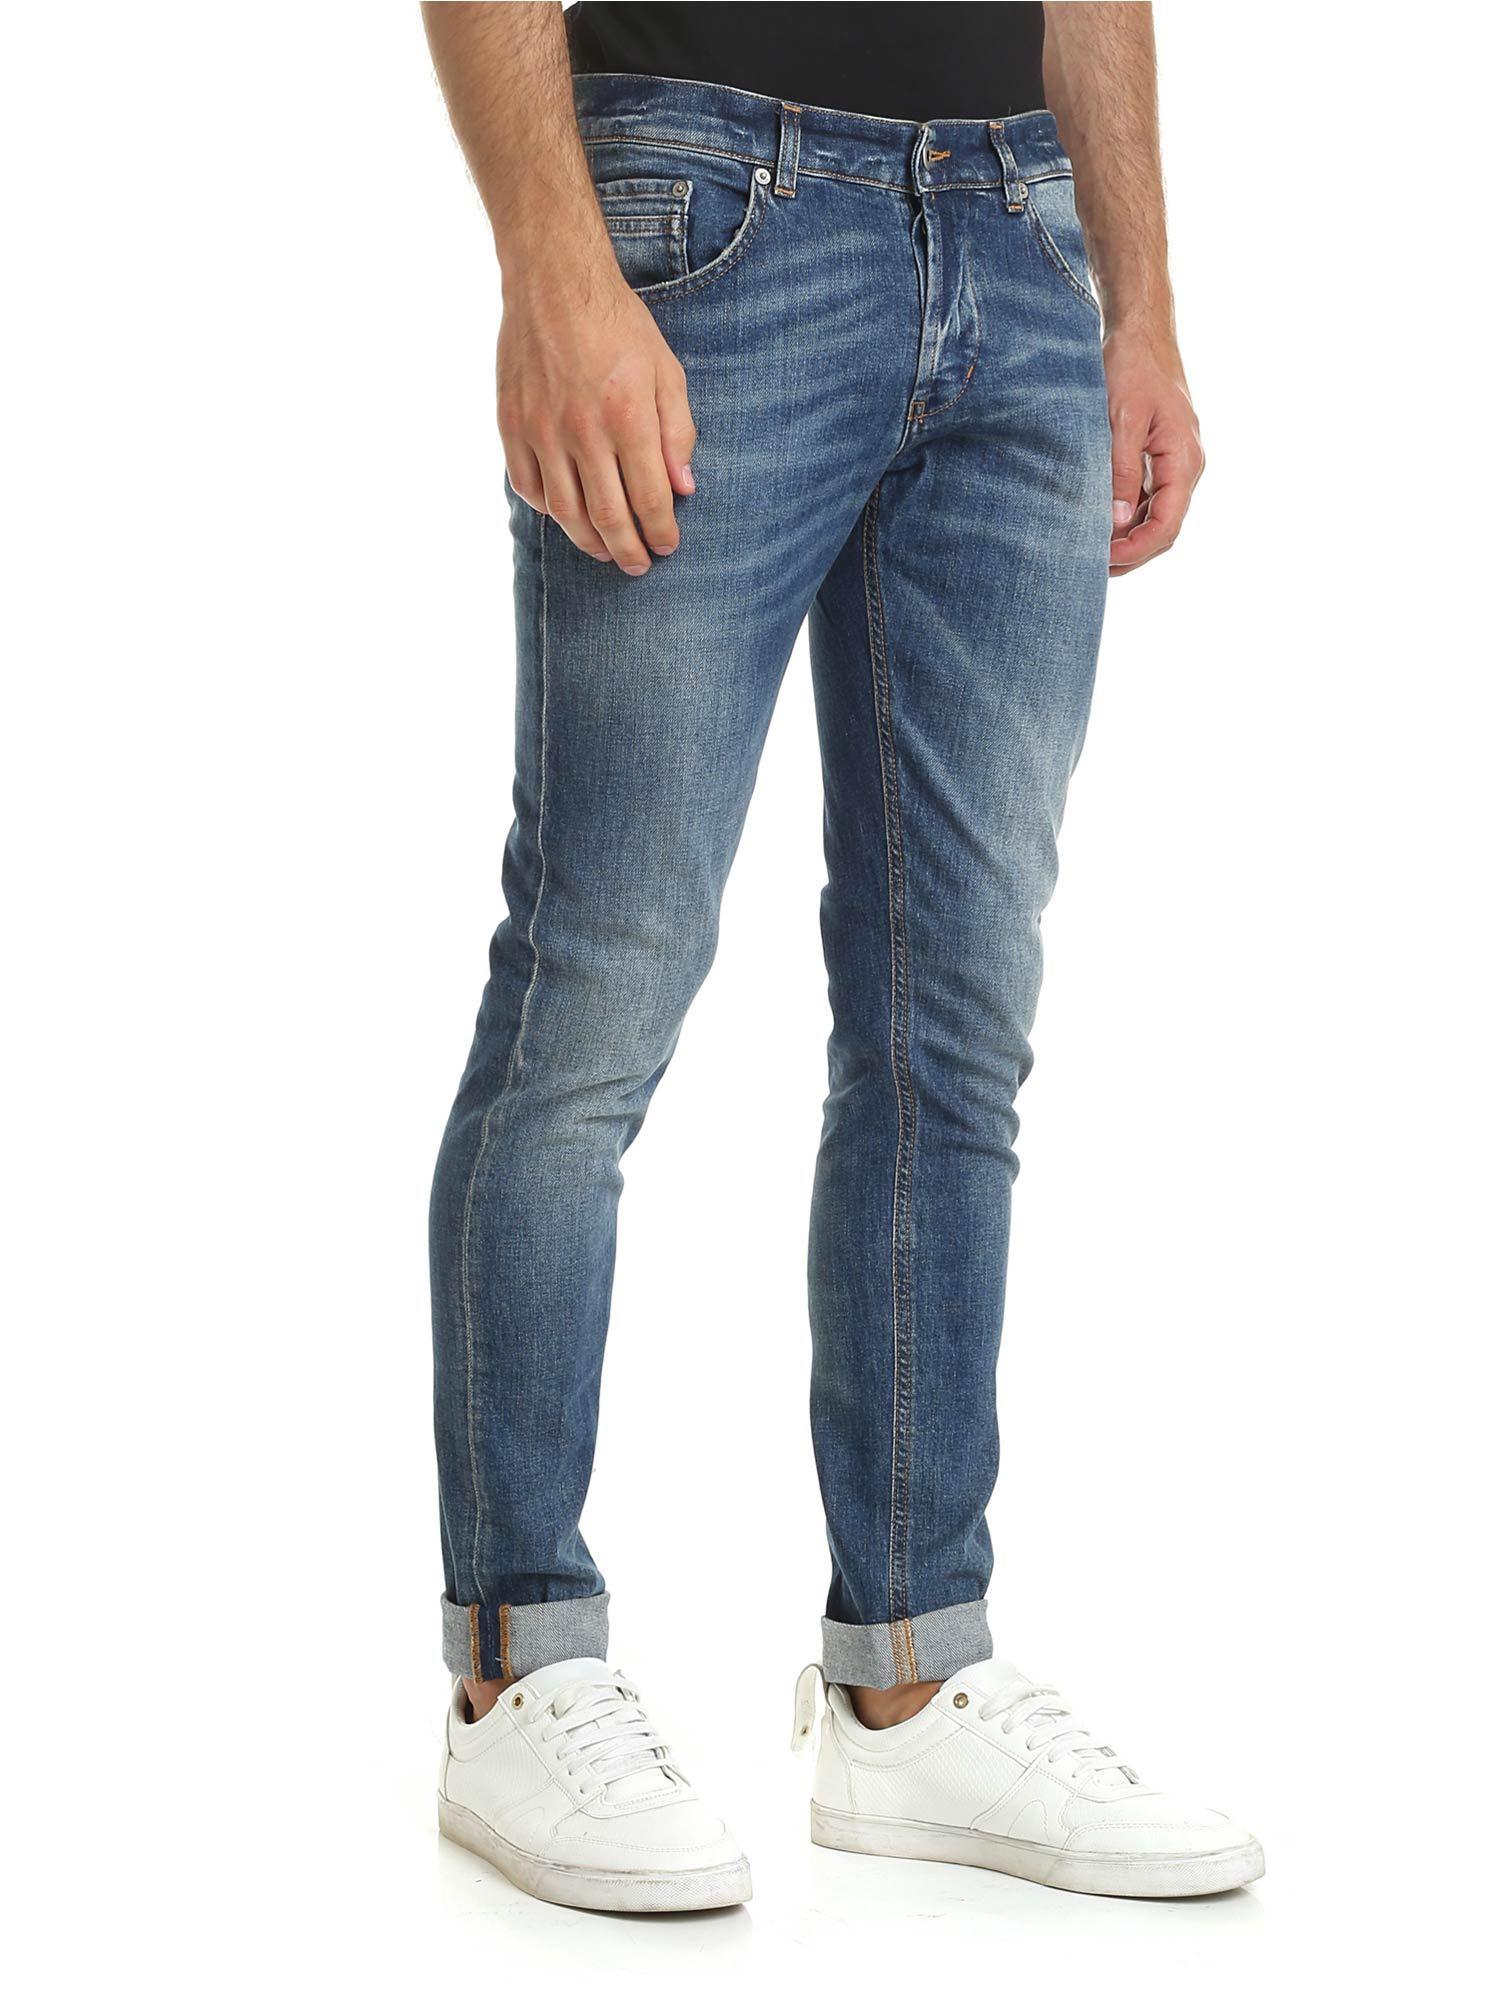 Dondup Denim Ritchie Jeans In Light Blue for Men - Lyst